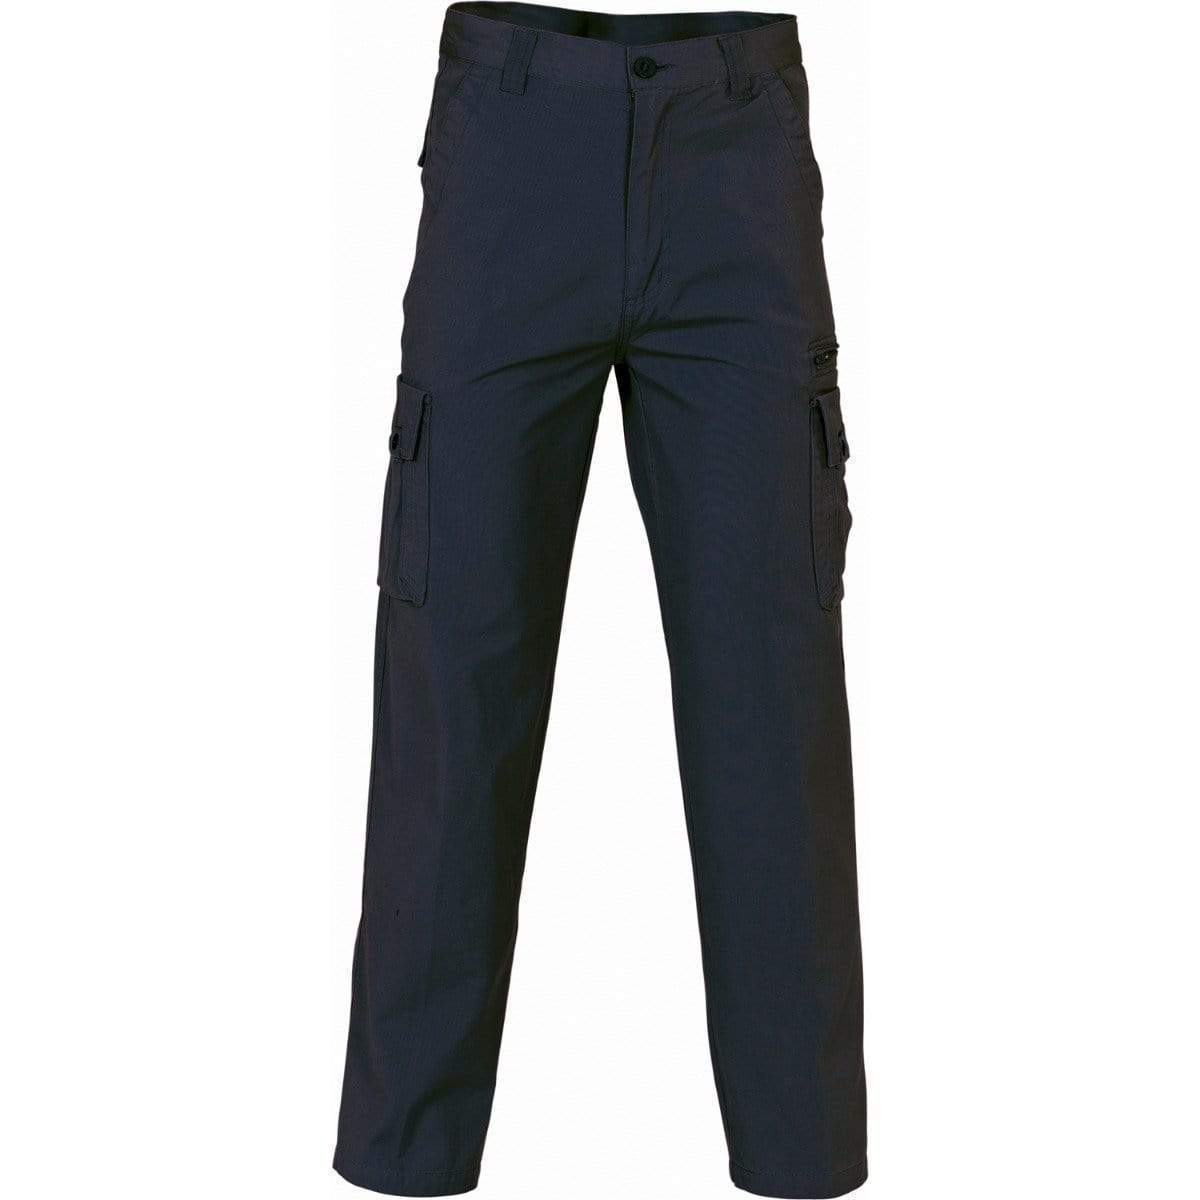 Dnc Workwear Island Cotton Duck Weave Cargo Pants - 4535 Work Wear DNC Workwear Navy 82R 